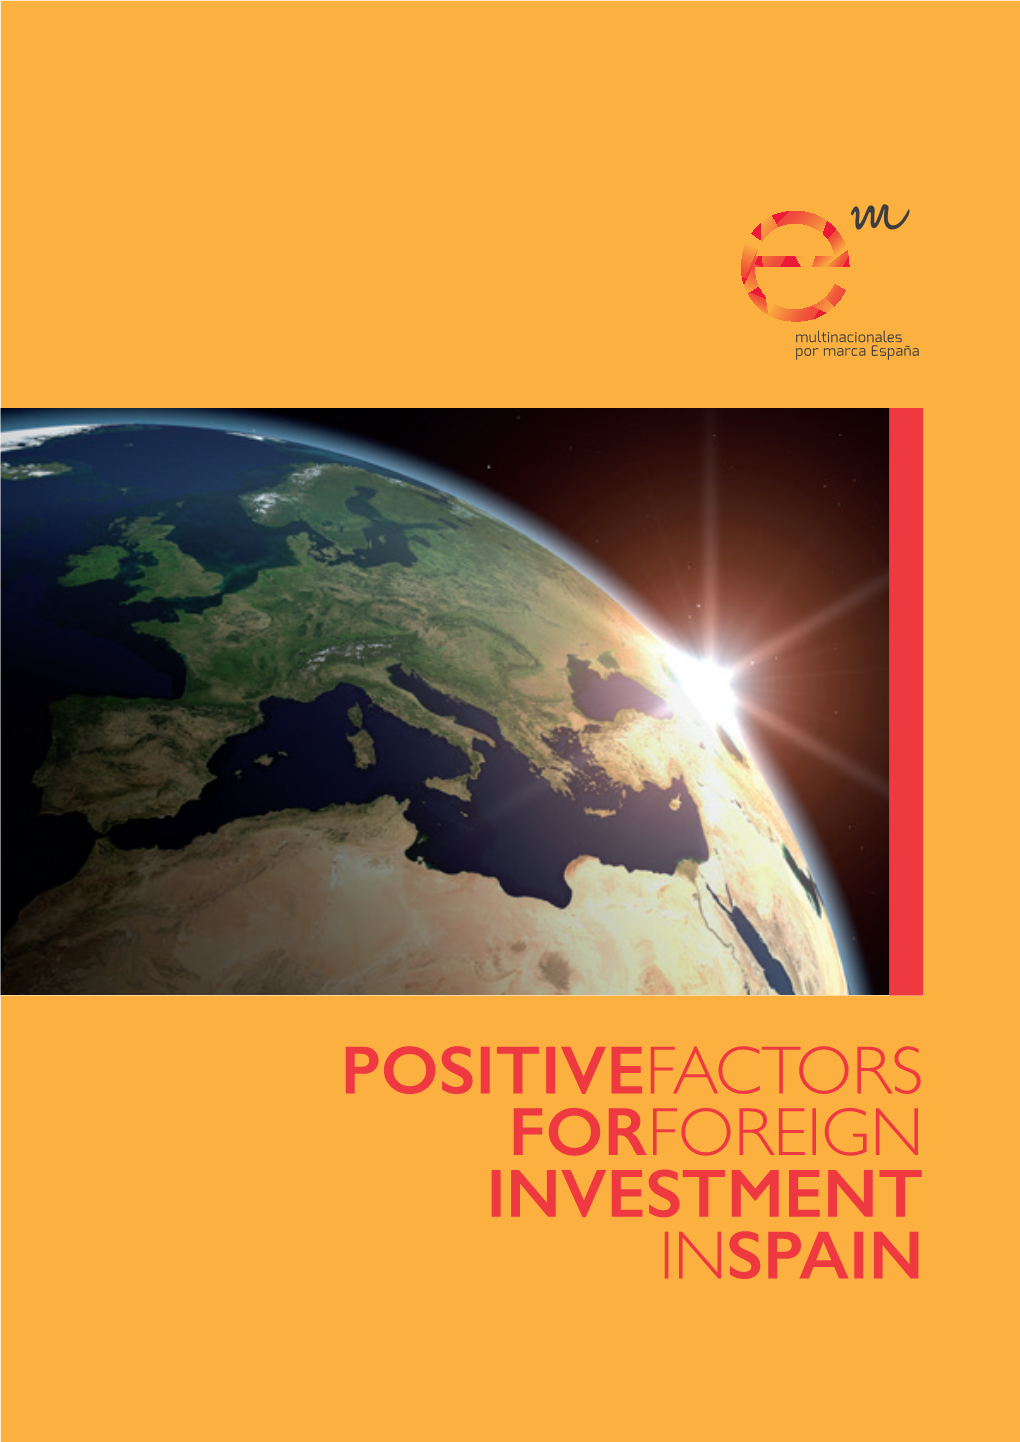 Positivefactors Forforeign Investment Inspain Index